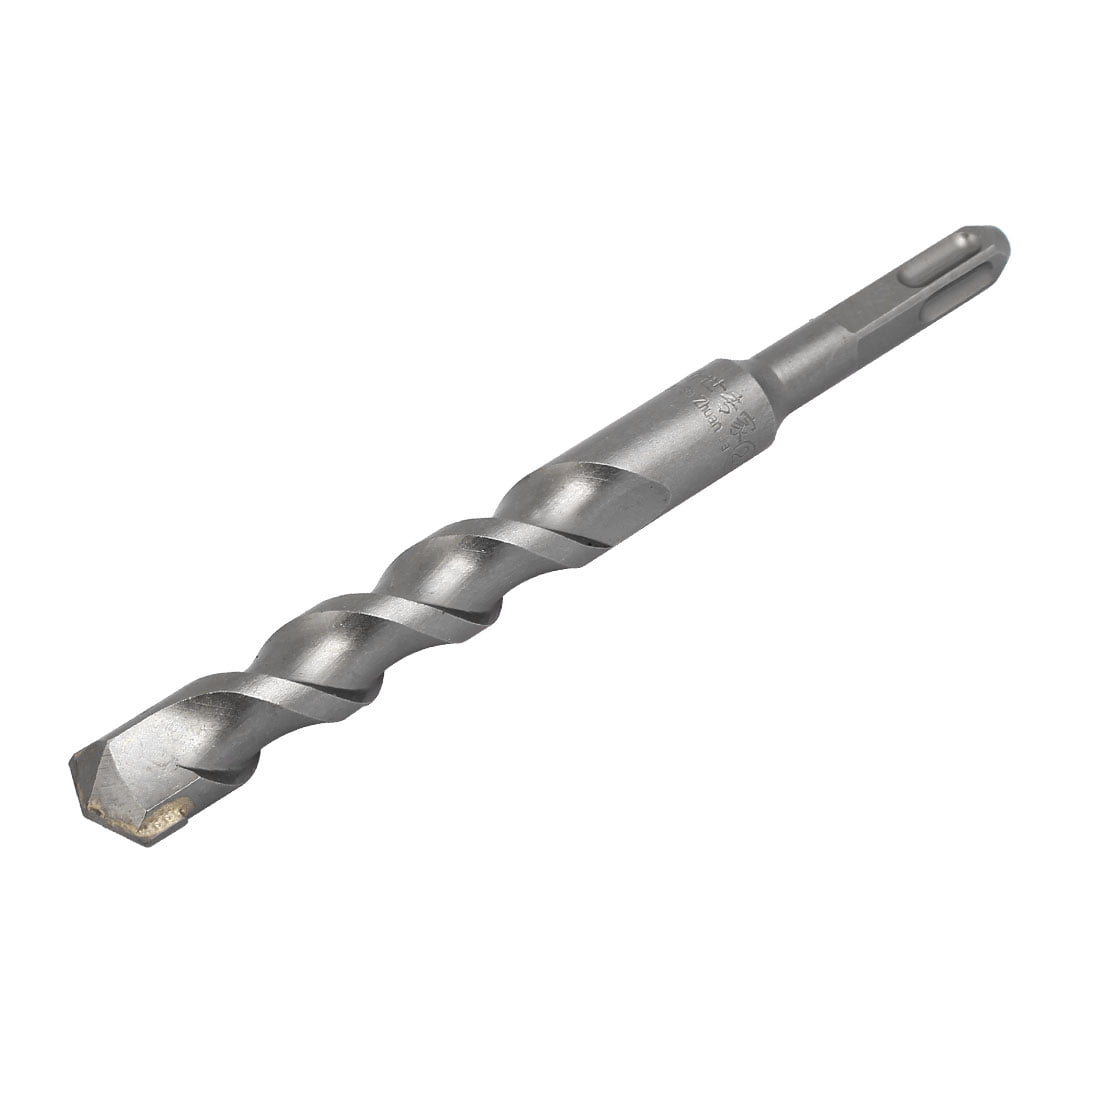 Draak rook Welvarend 22mm Tip 200mm Long Chrome Steel Square SDS Plus Shank Masonry Hammer Drill  Bit - Walmart.com